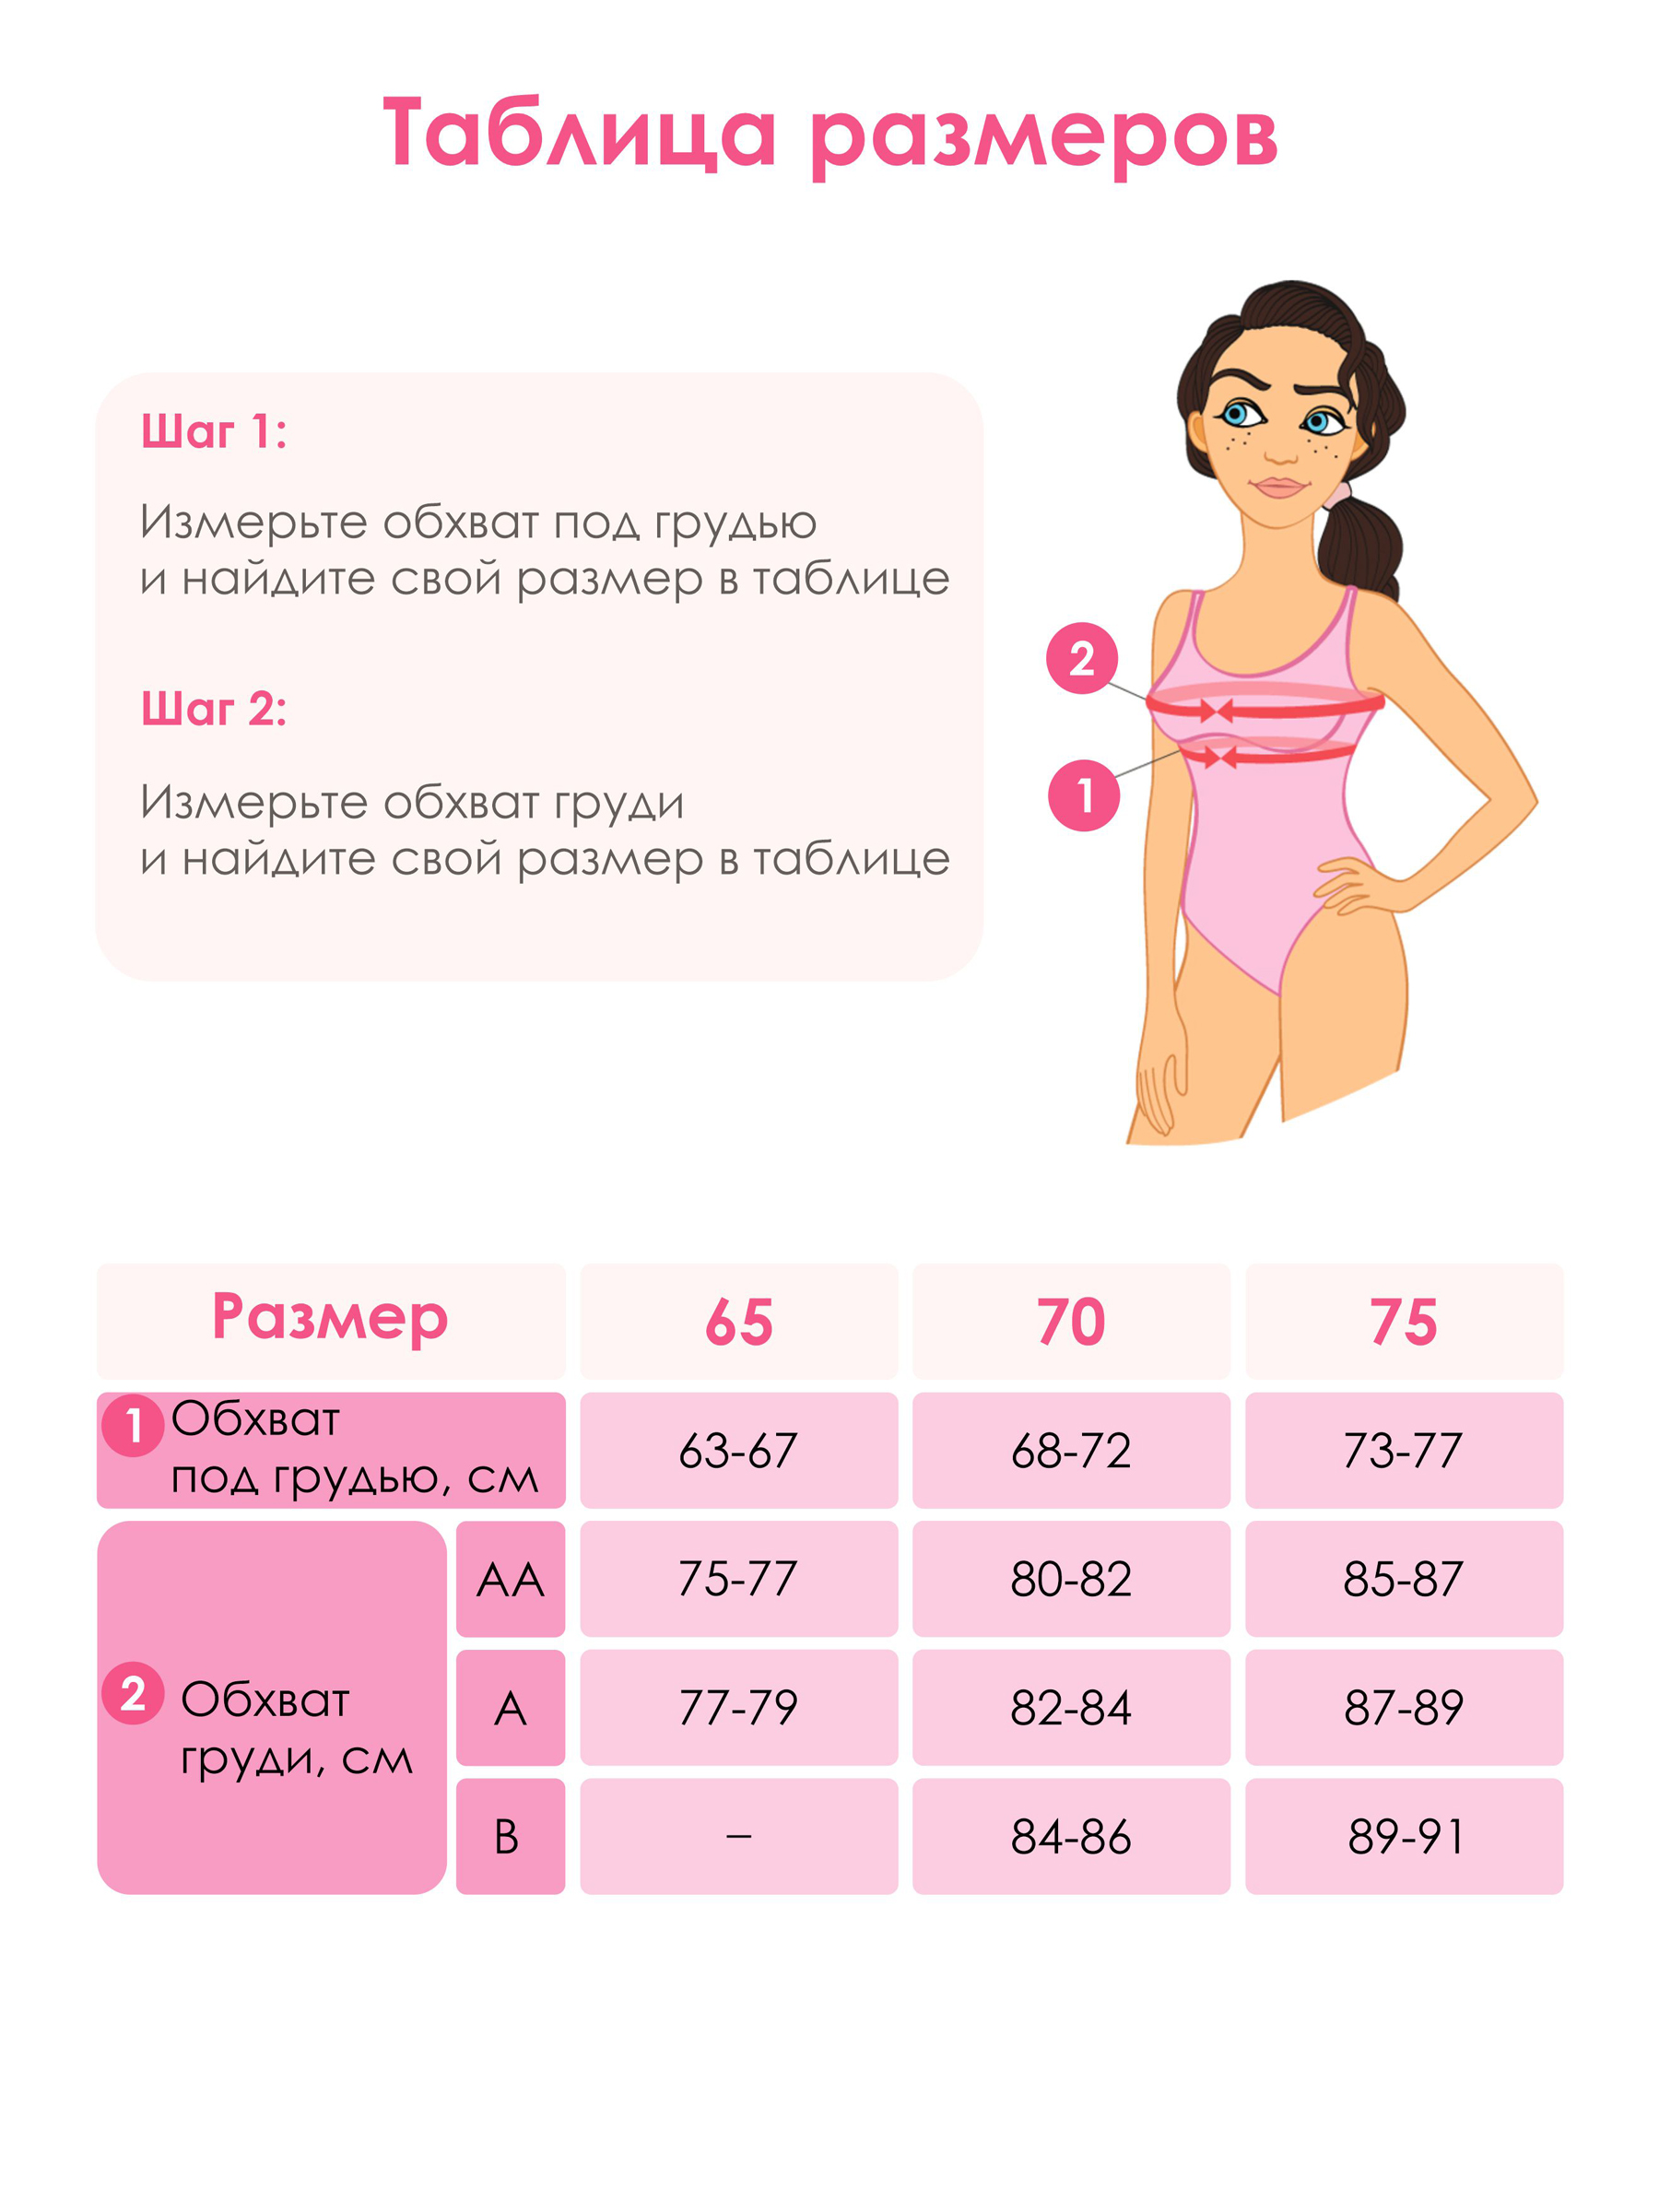 статистика размеров груди по россии фото 36